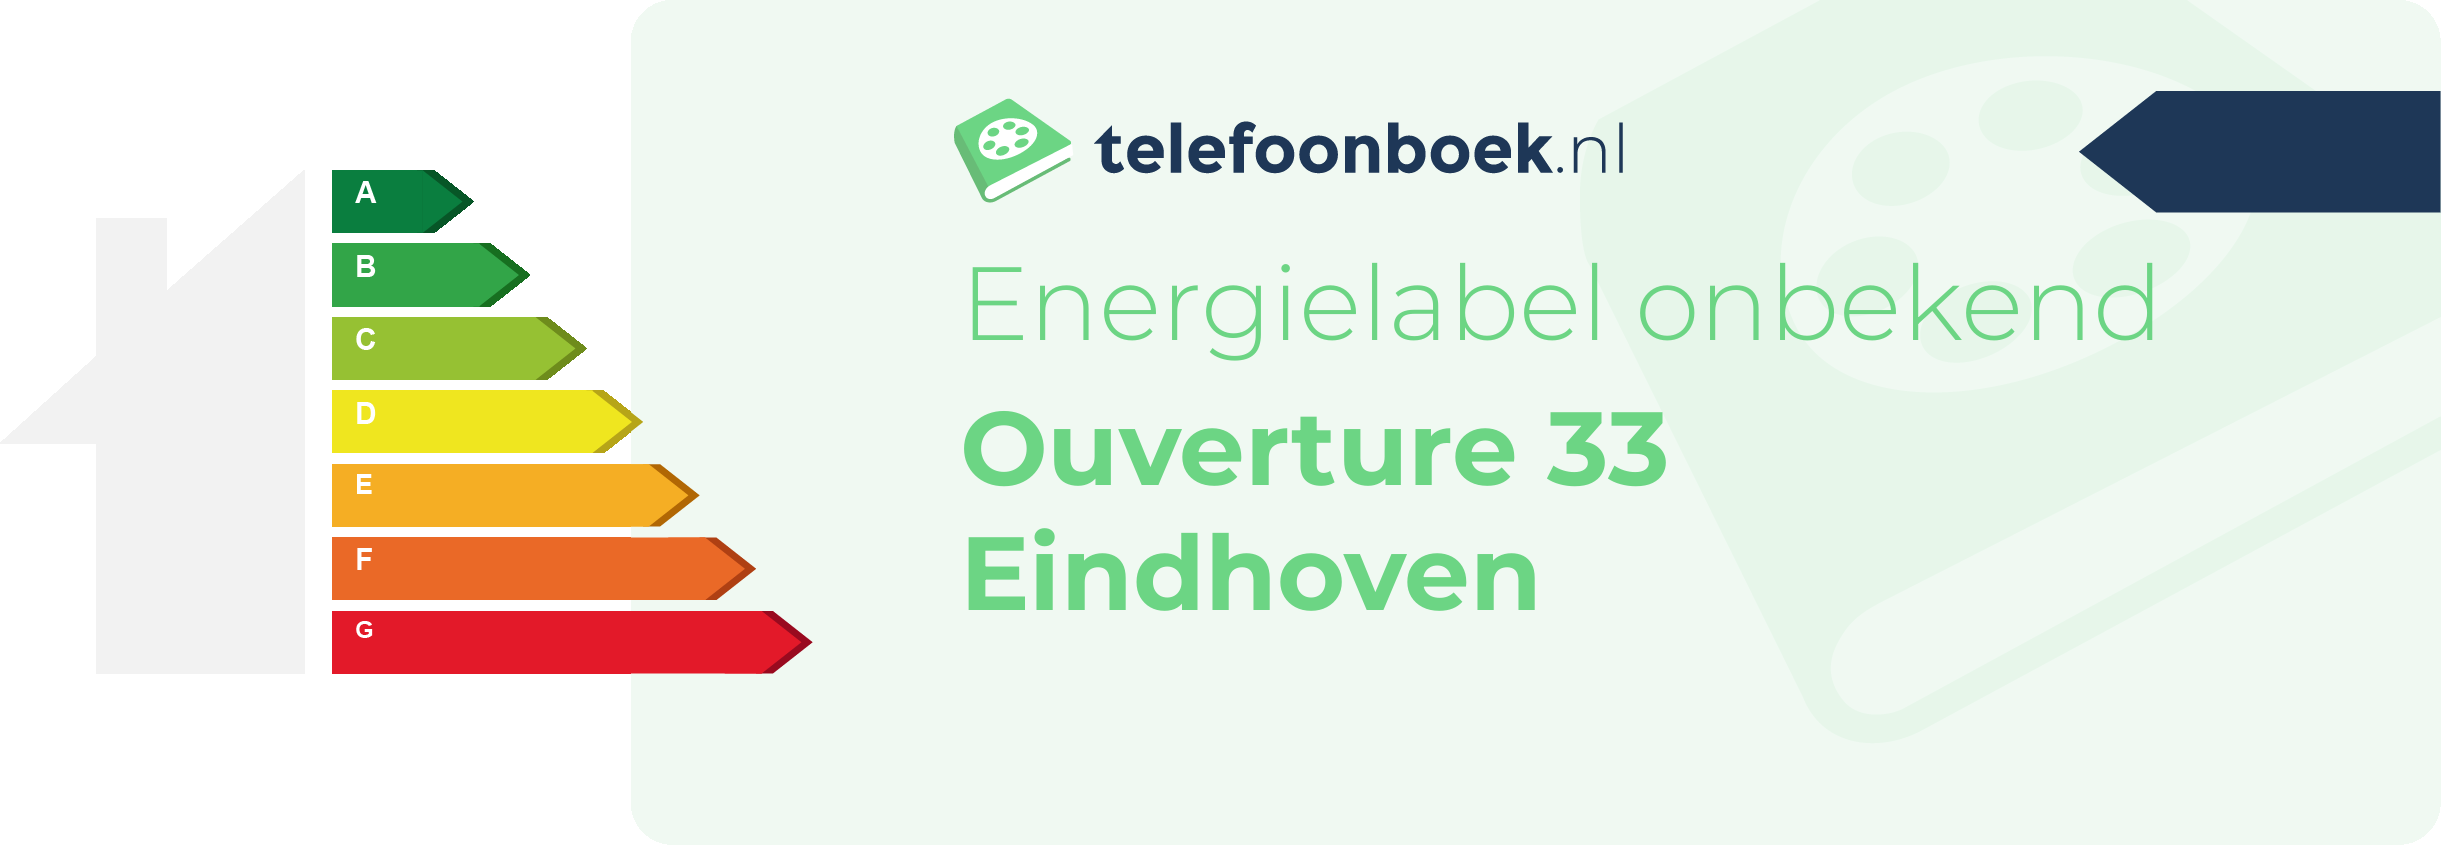 Energielabel Ouverture 33 Eindhoven